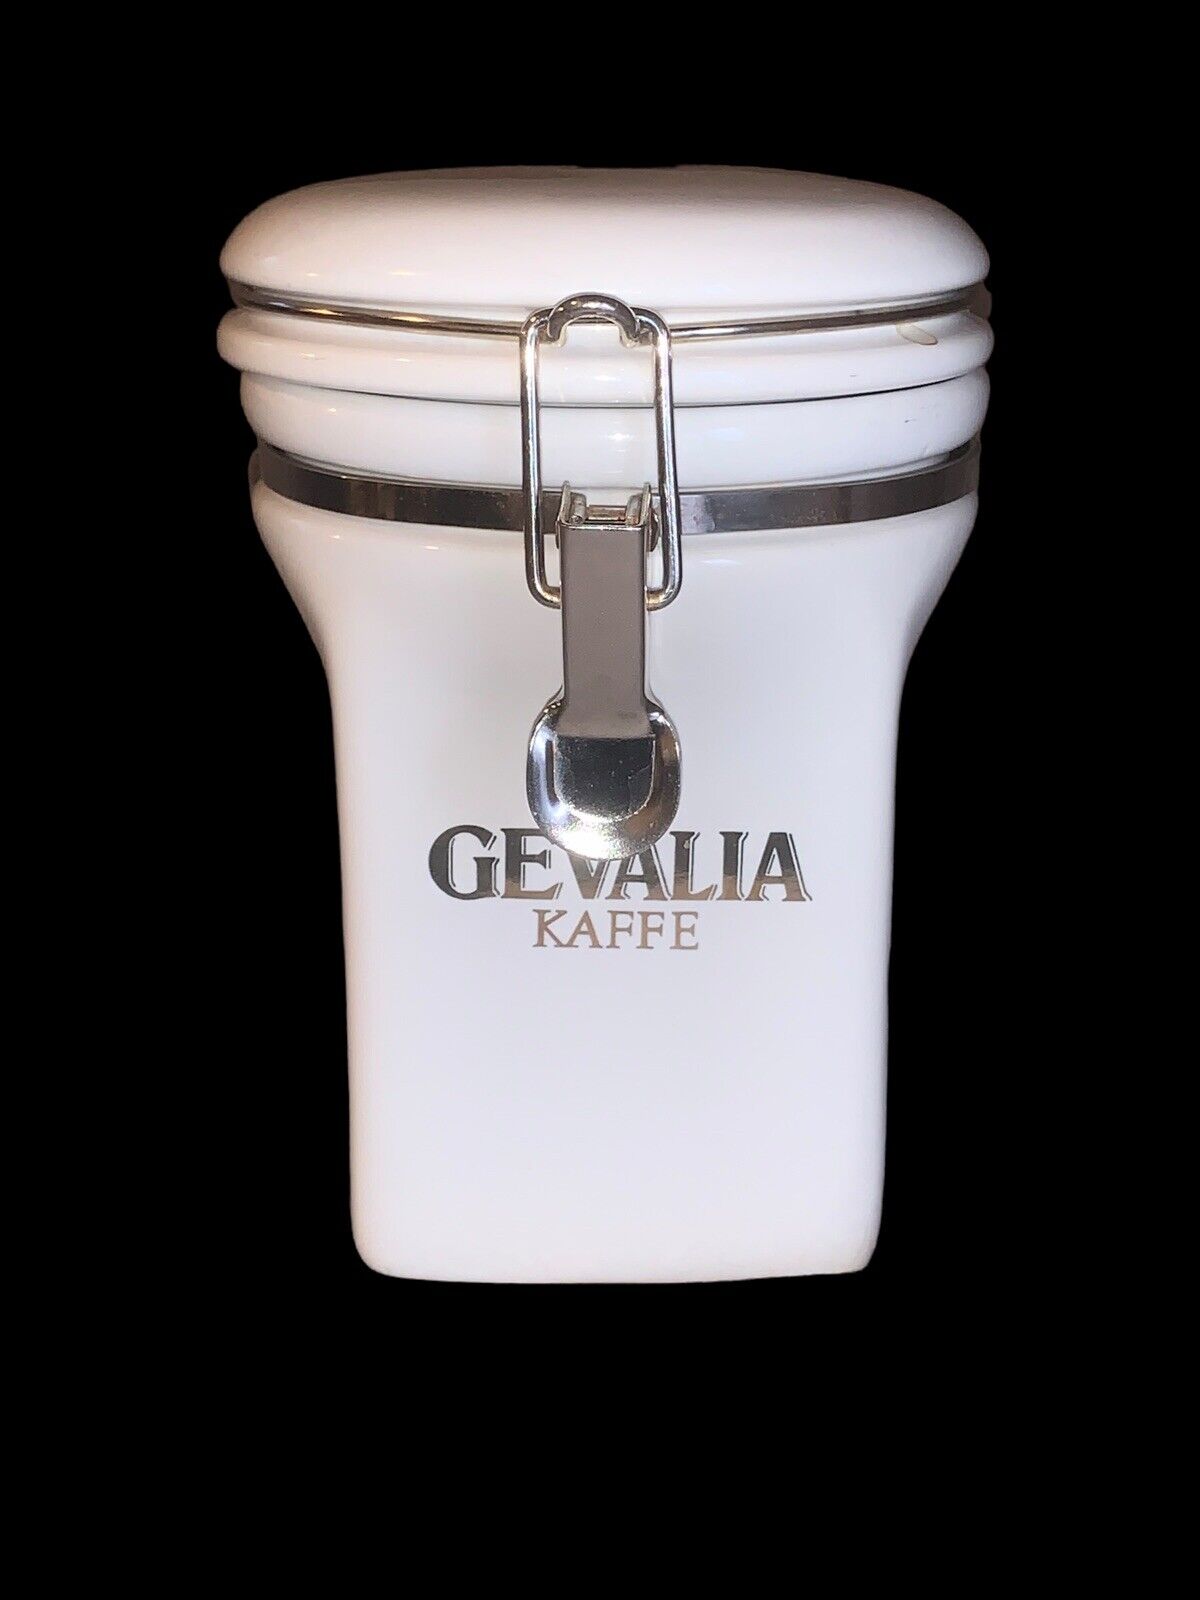 Vintage Gevalia Kaffee Coffee Ceramic Cannister White Gold Trim 